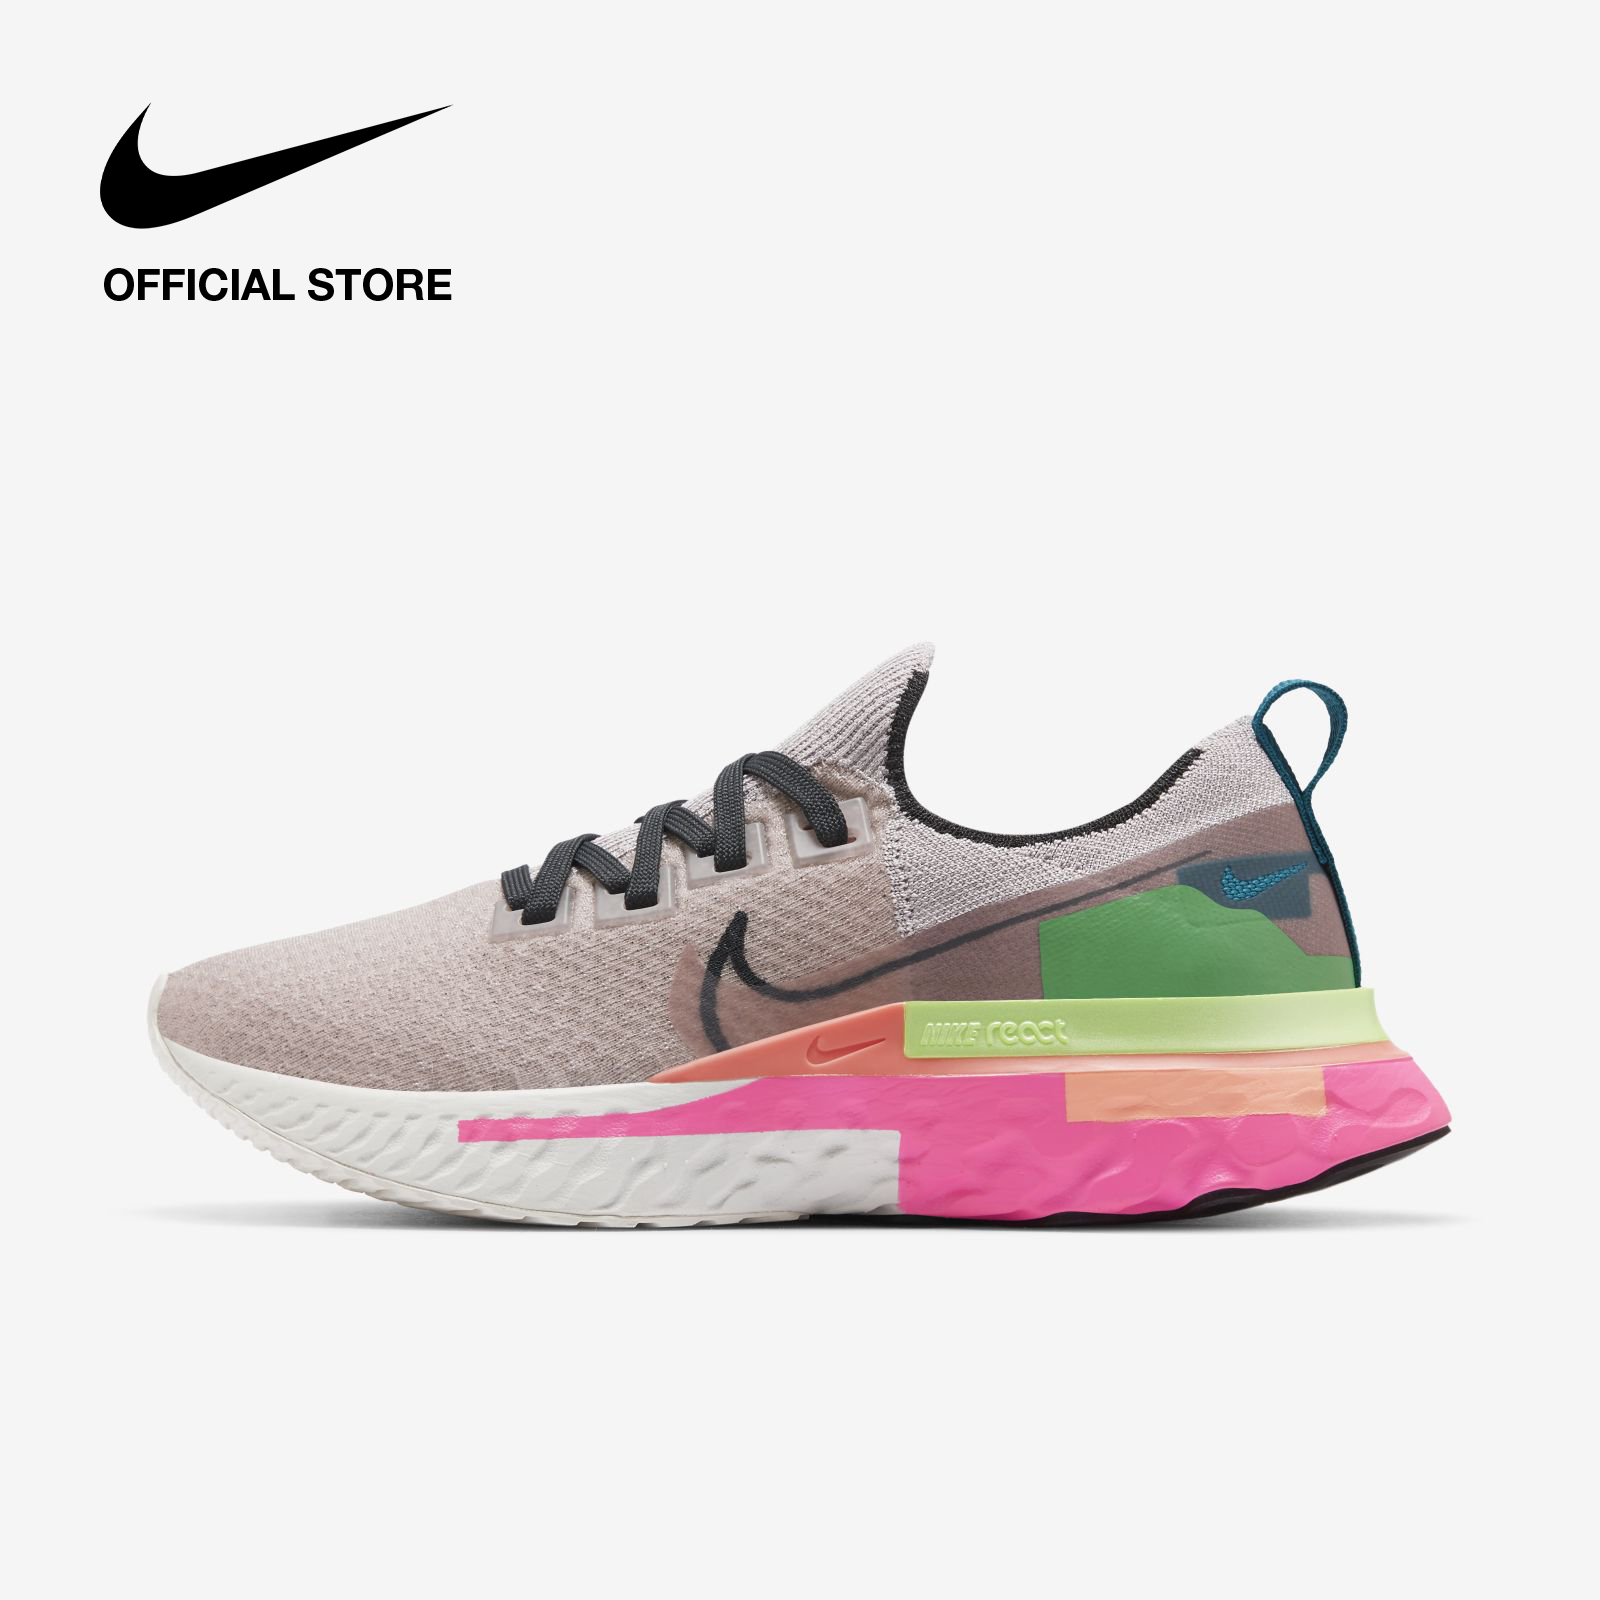 Nike Women's React Infinity Run Flyknit Premium Running Shoes - Violet Ash รองเท้าวิ่งผู้หญิง Nike React Infinity Run Flyknit Premium - สีไวโอเลตแอช